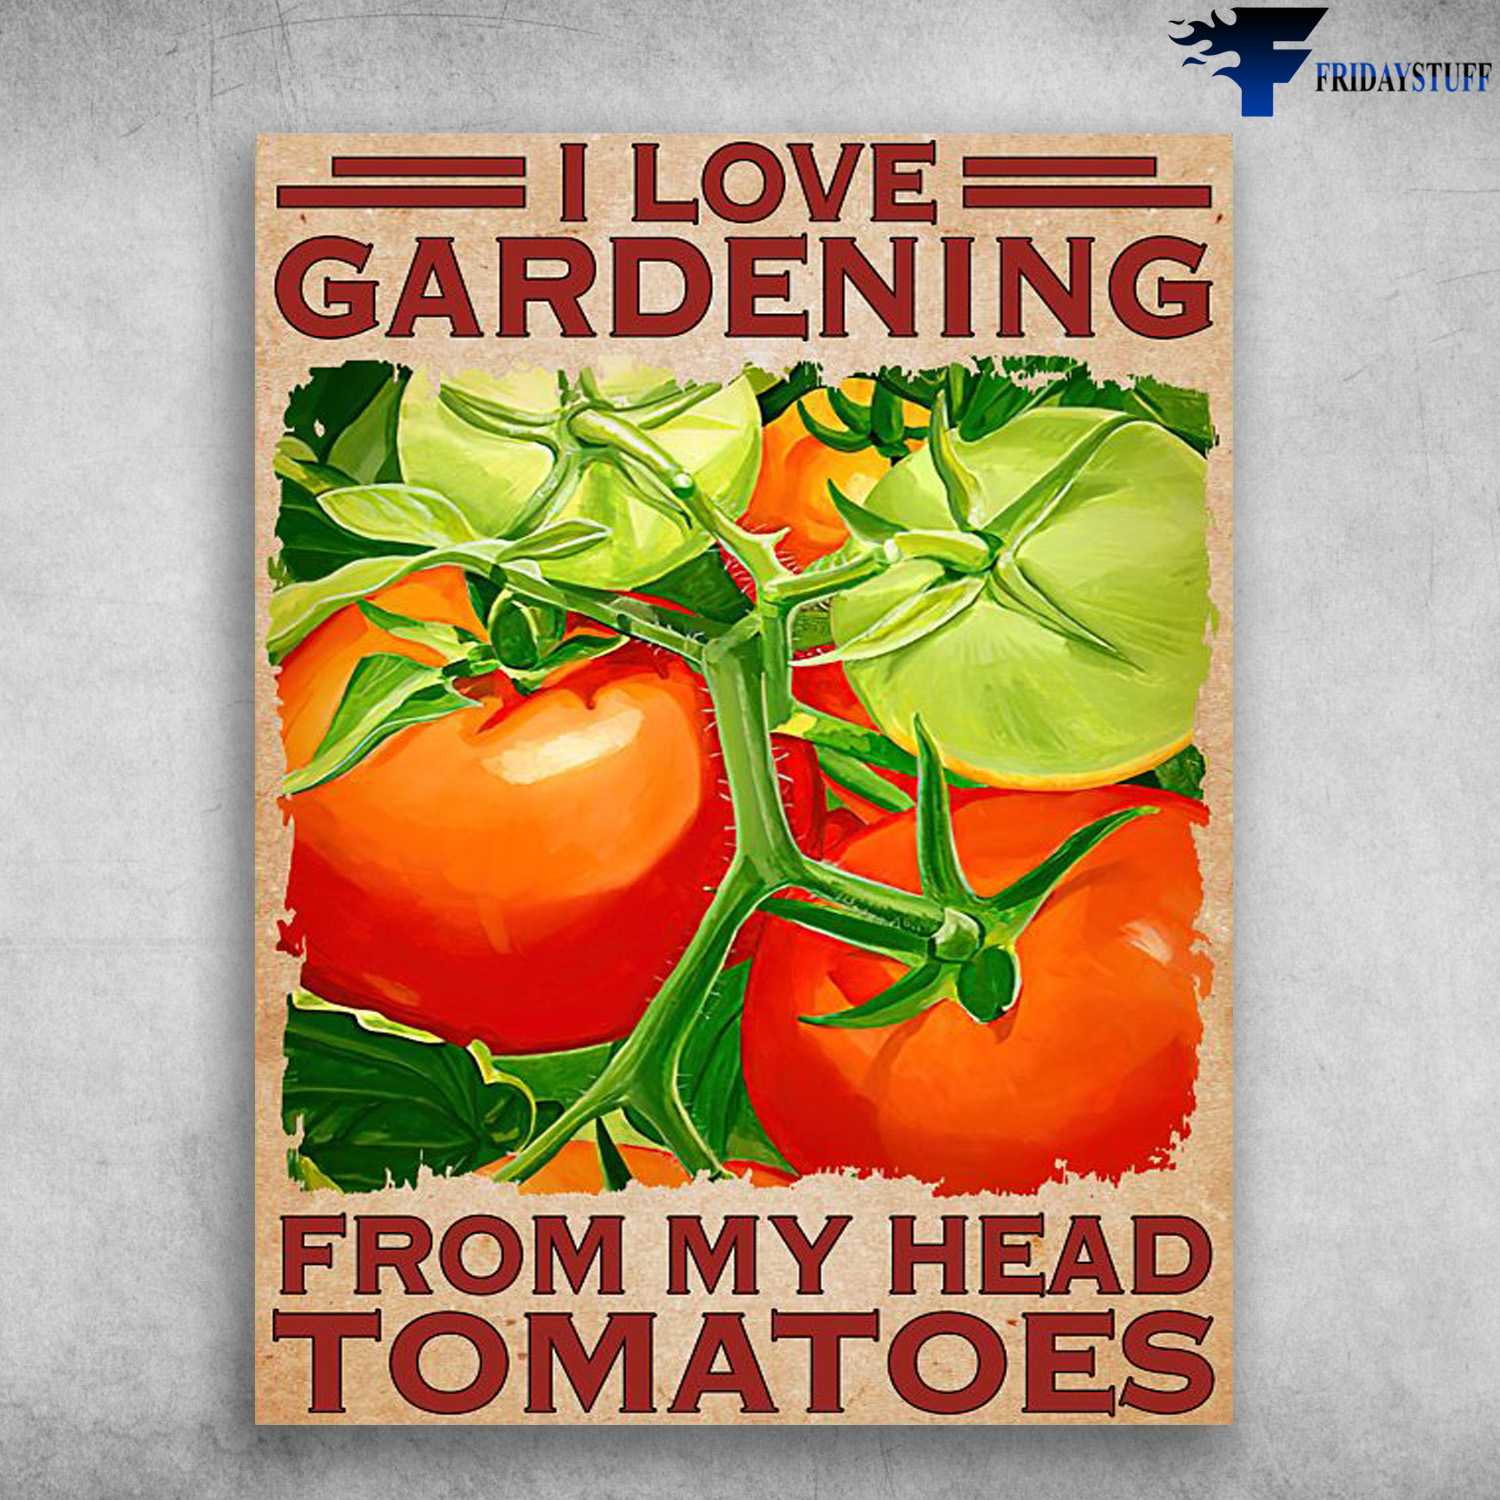 Gardening Poster, Tomatos Garden - I Love Gardening, From My Head Tomatoes